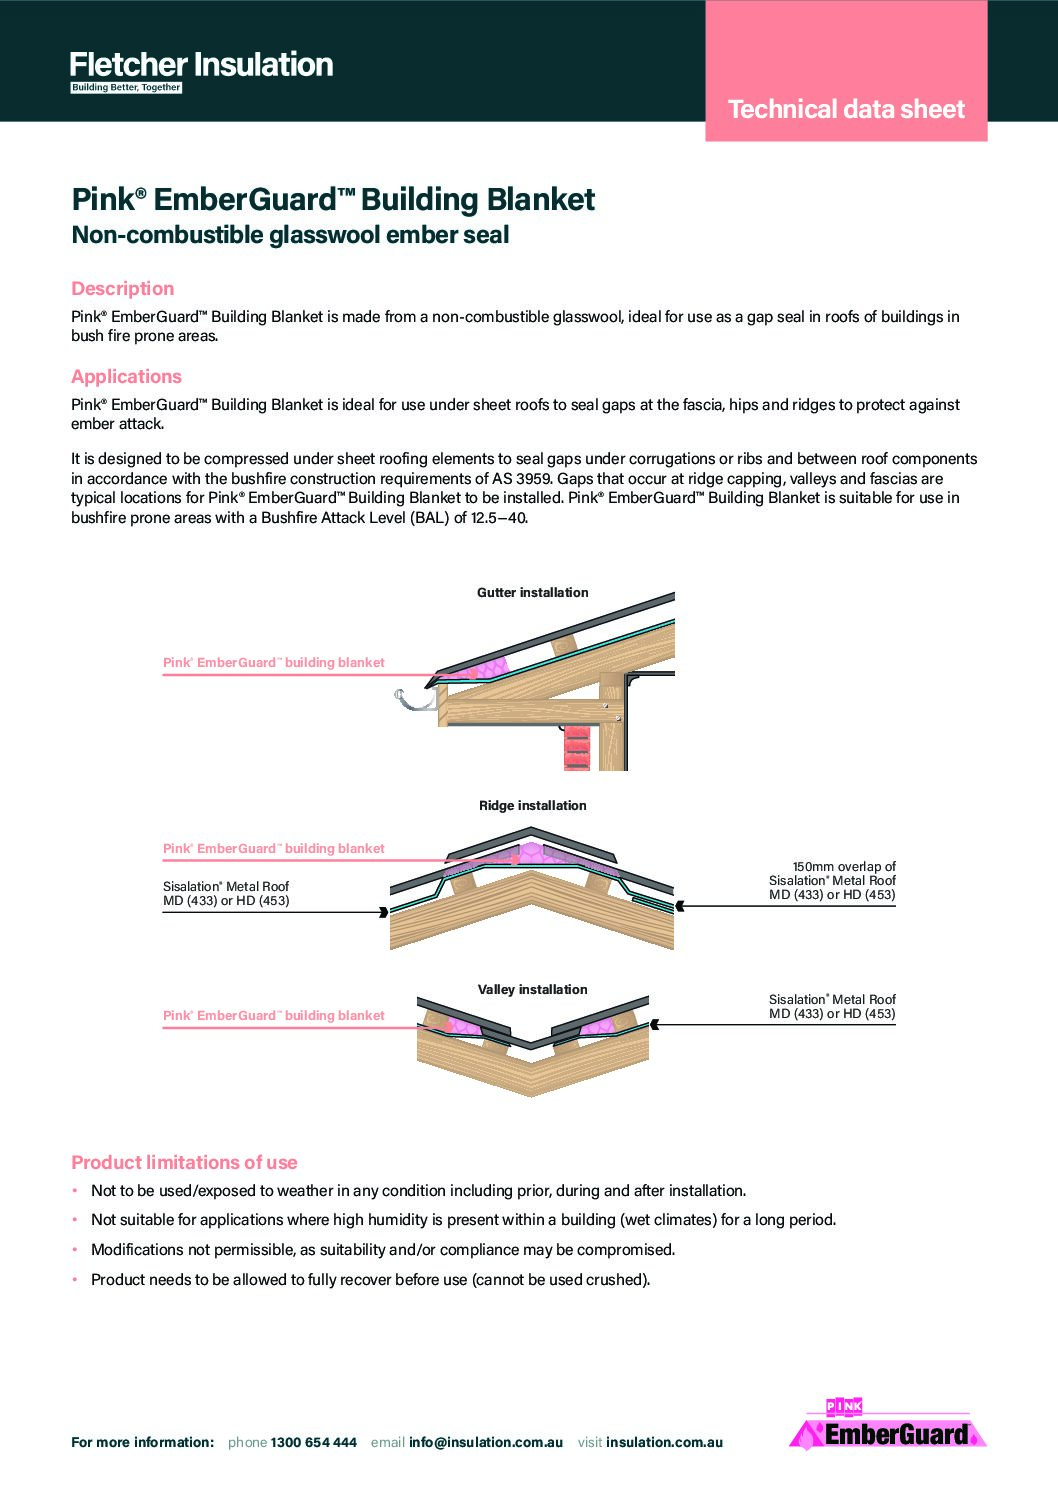 Pink® Emberguard™ Building Blanket Technical Data Sheet